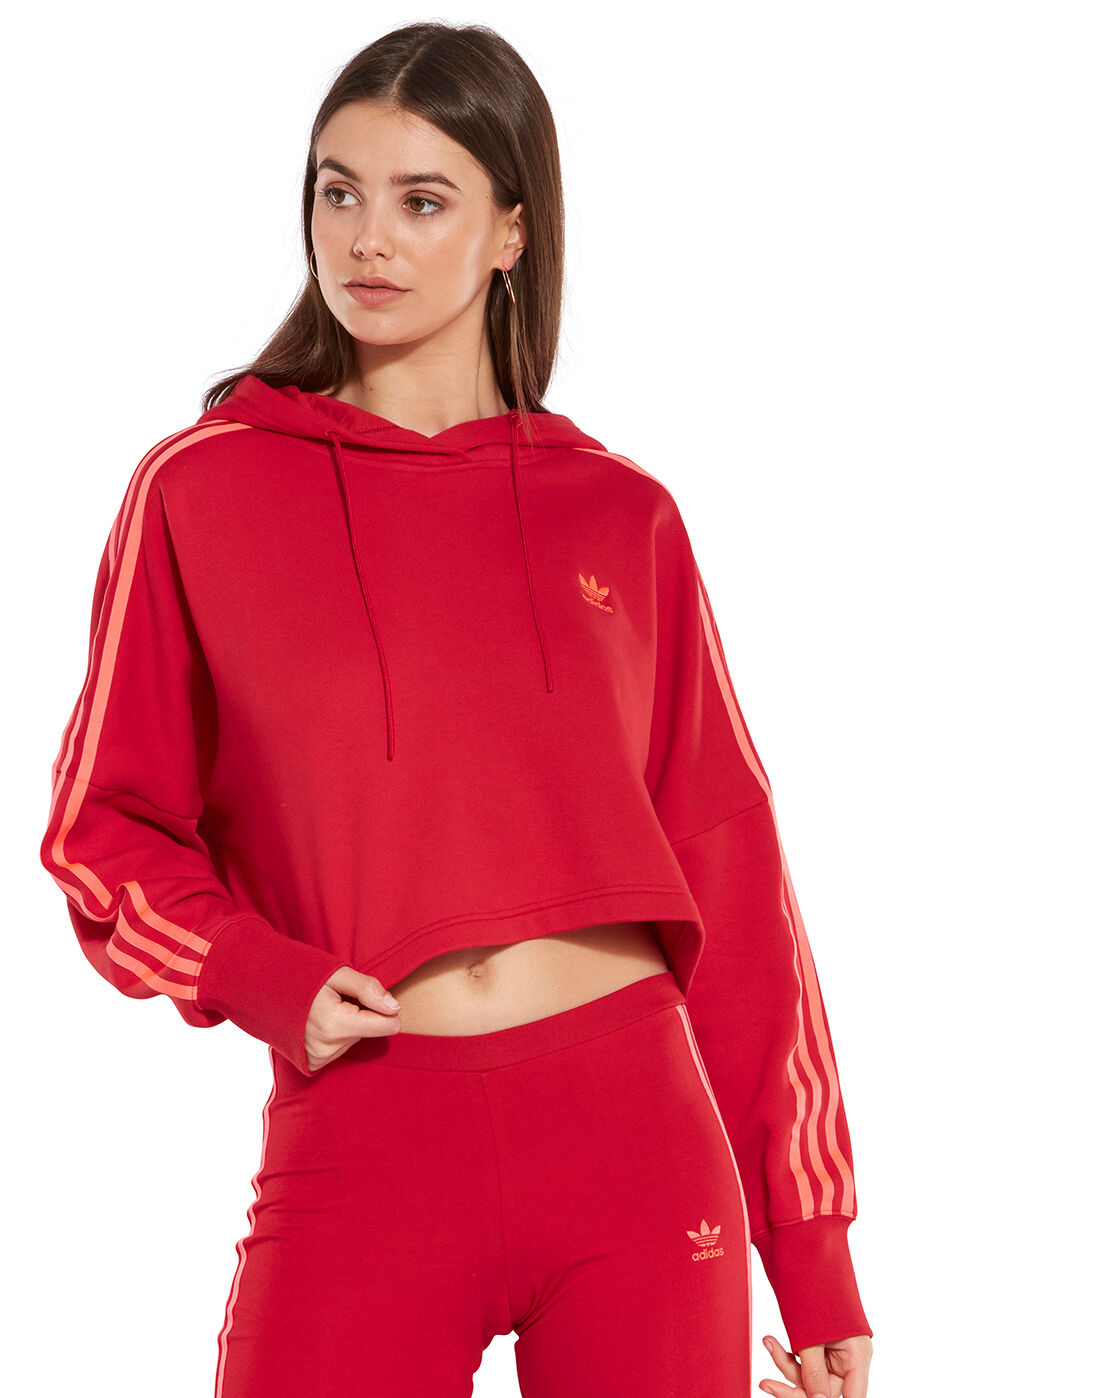 adidas originals red hoodie women's